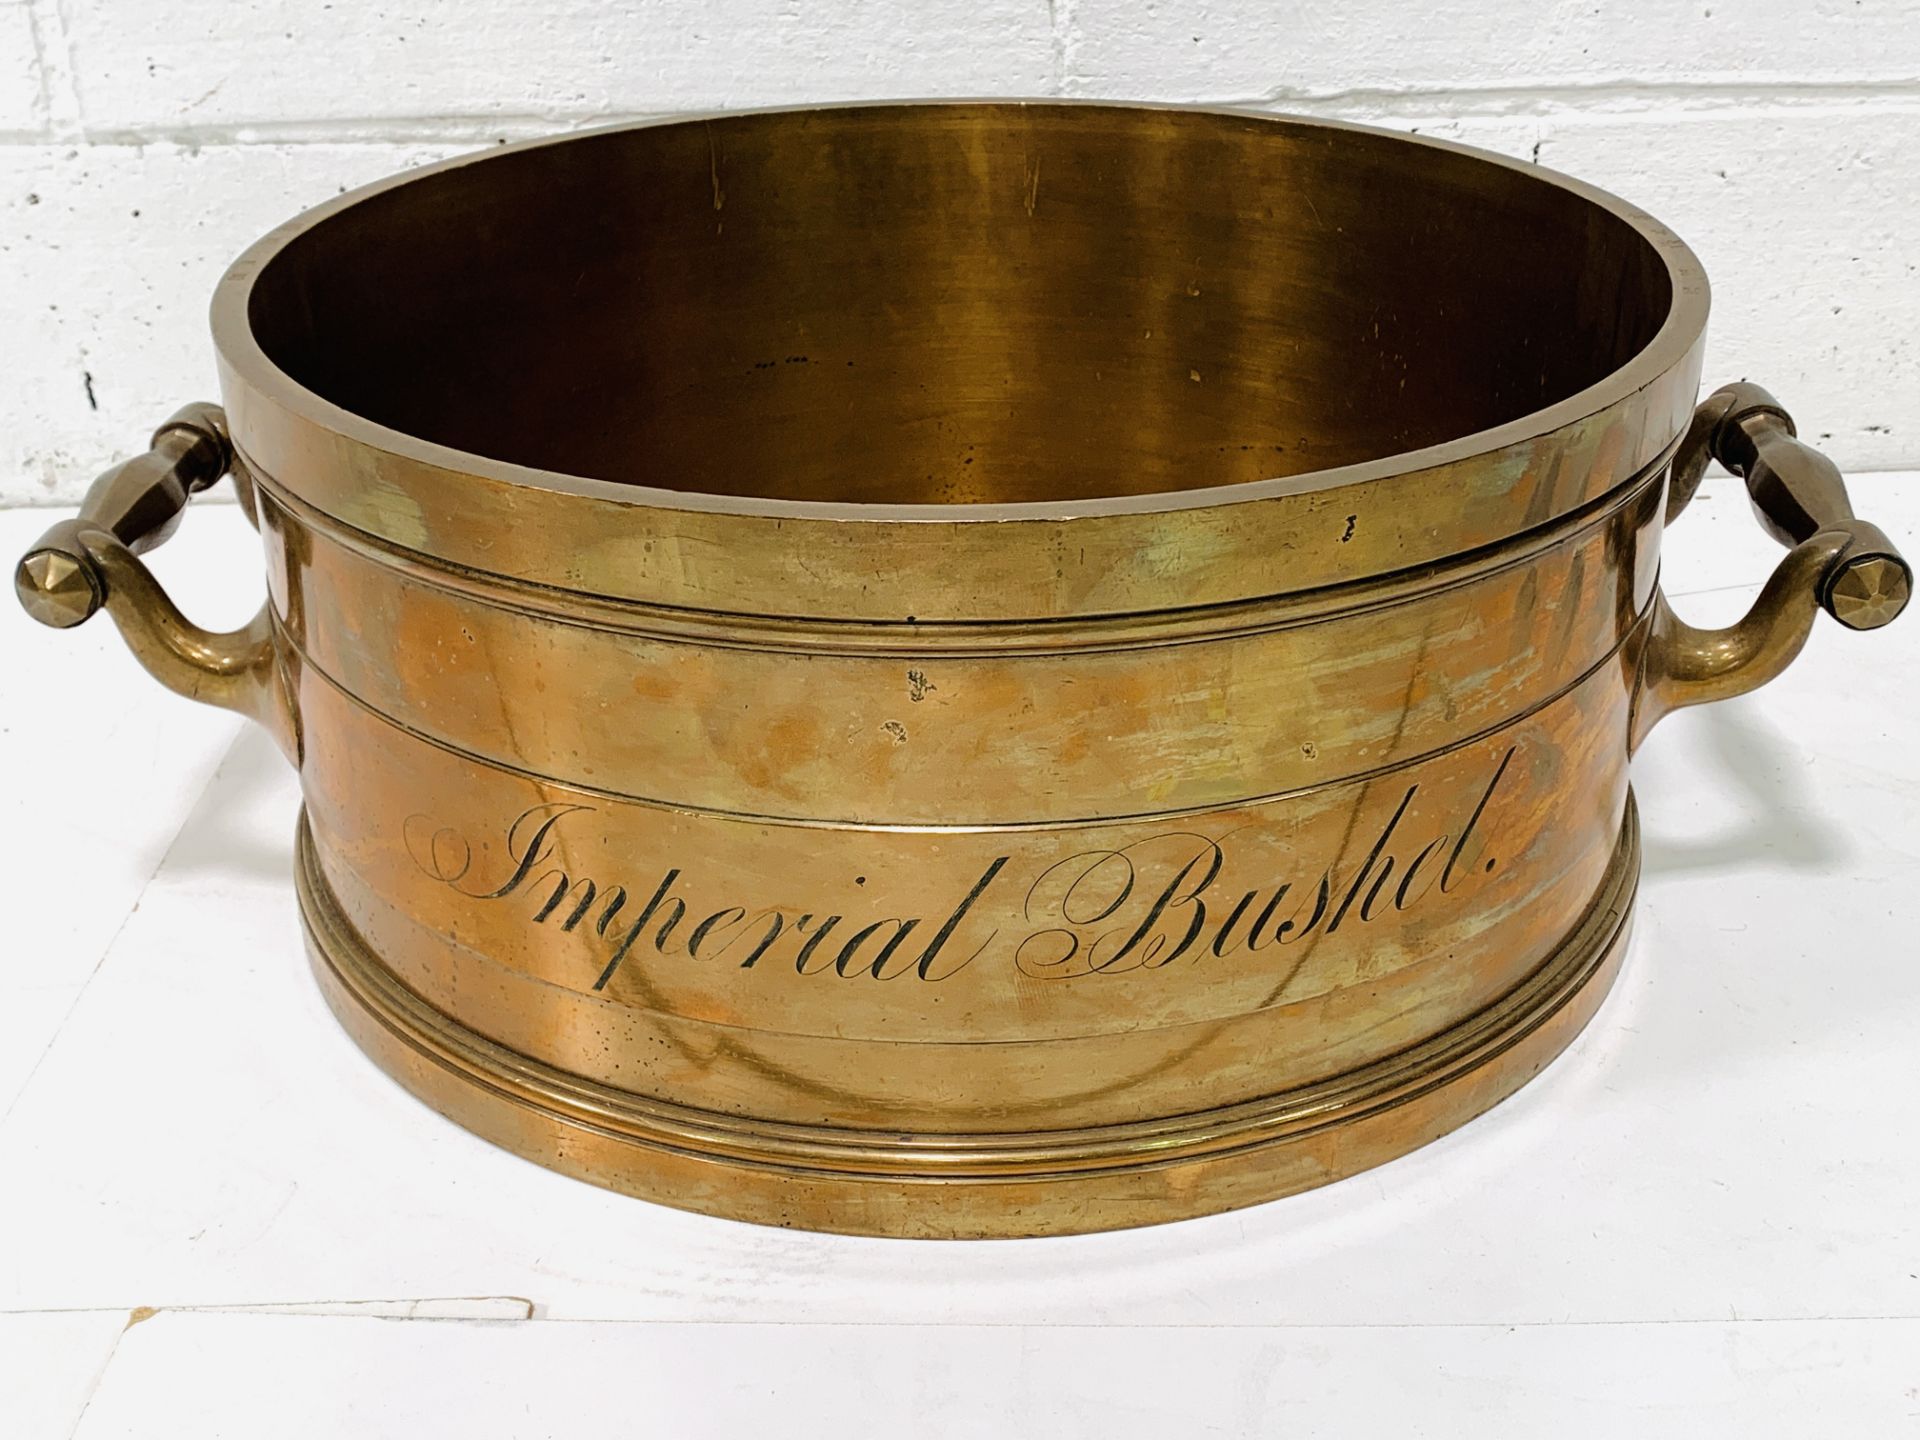 Imperial bushel bronze measure - Image 2 of 7